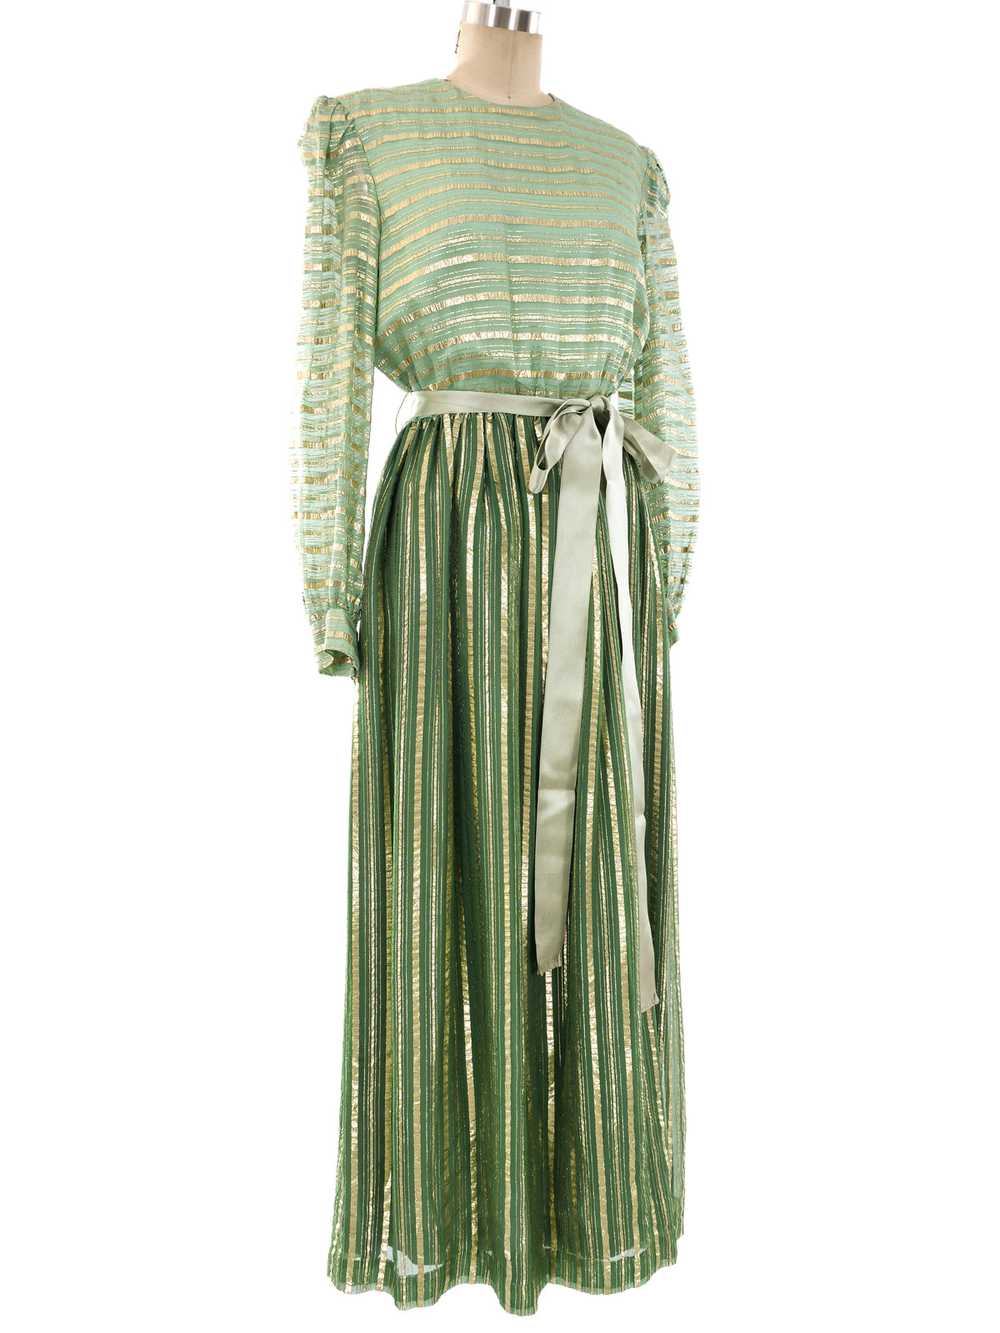 Richilene Metallic Green Lurex Gown - image 3